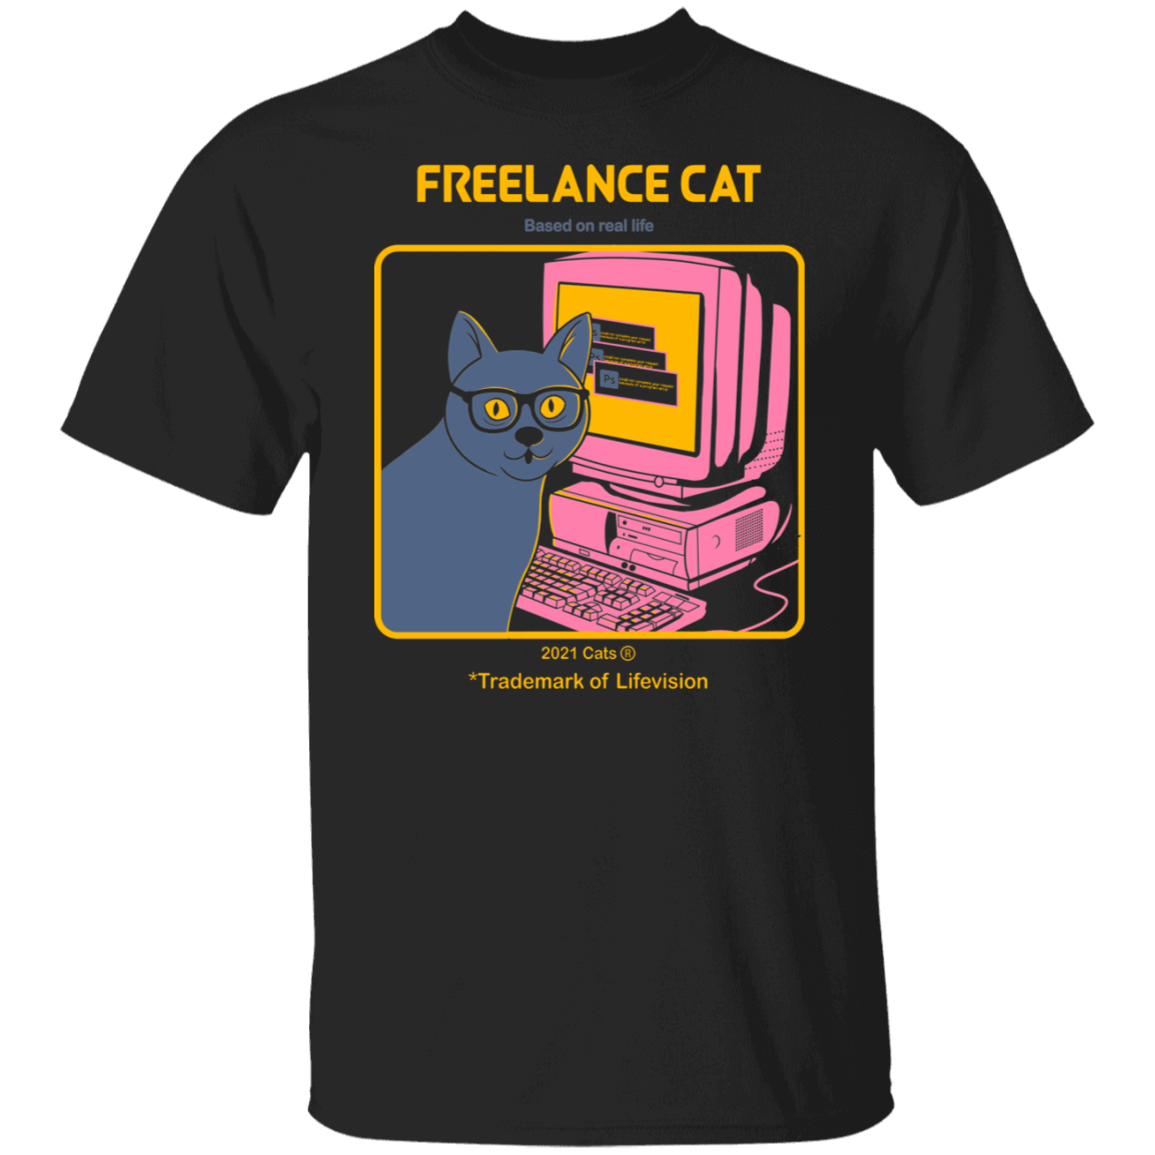 T-Shirts Black / S Freelance Cat T-Shirt